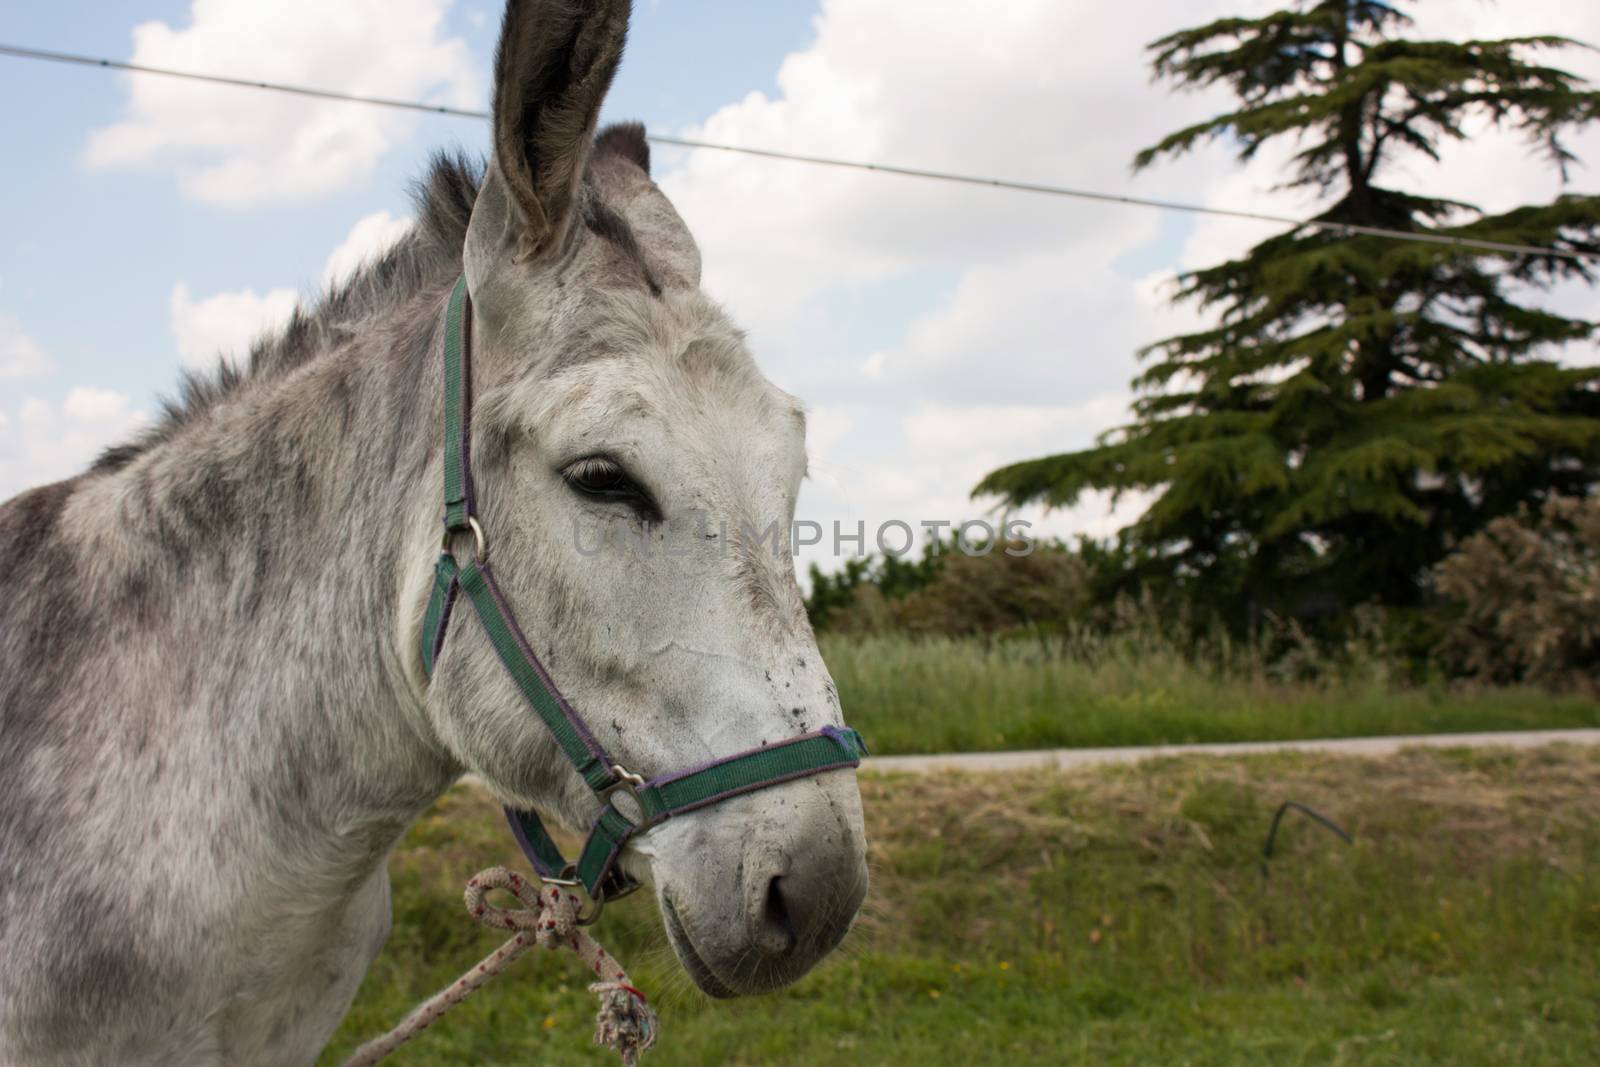 Donkey in a typical Italian Farm by pippocarlot